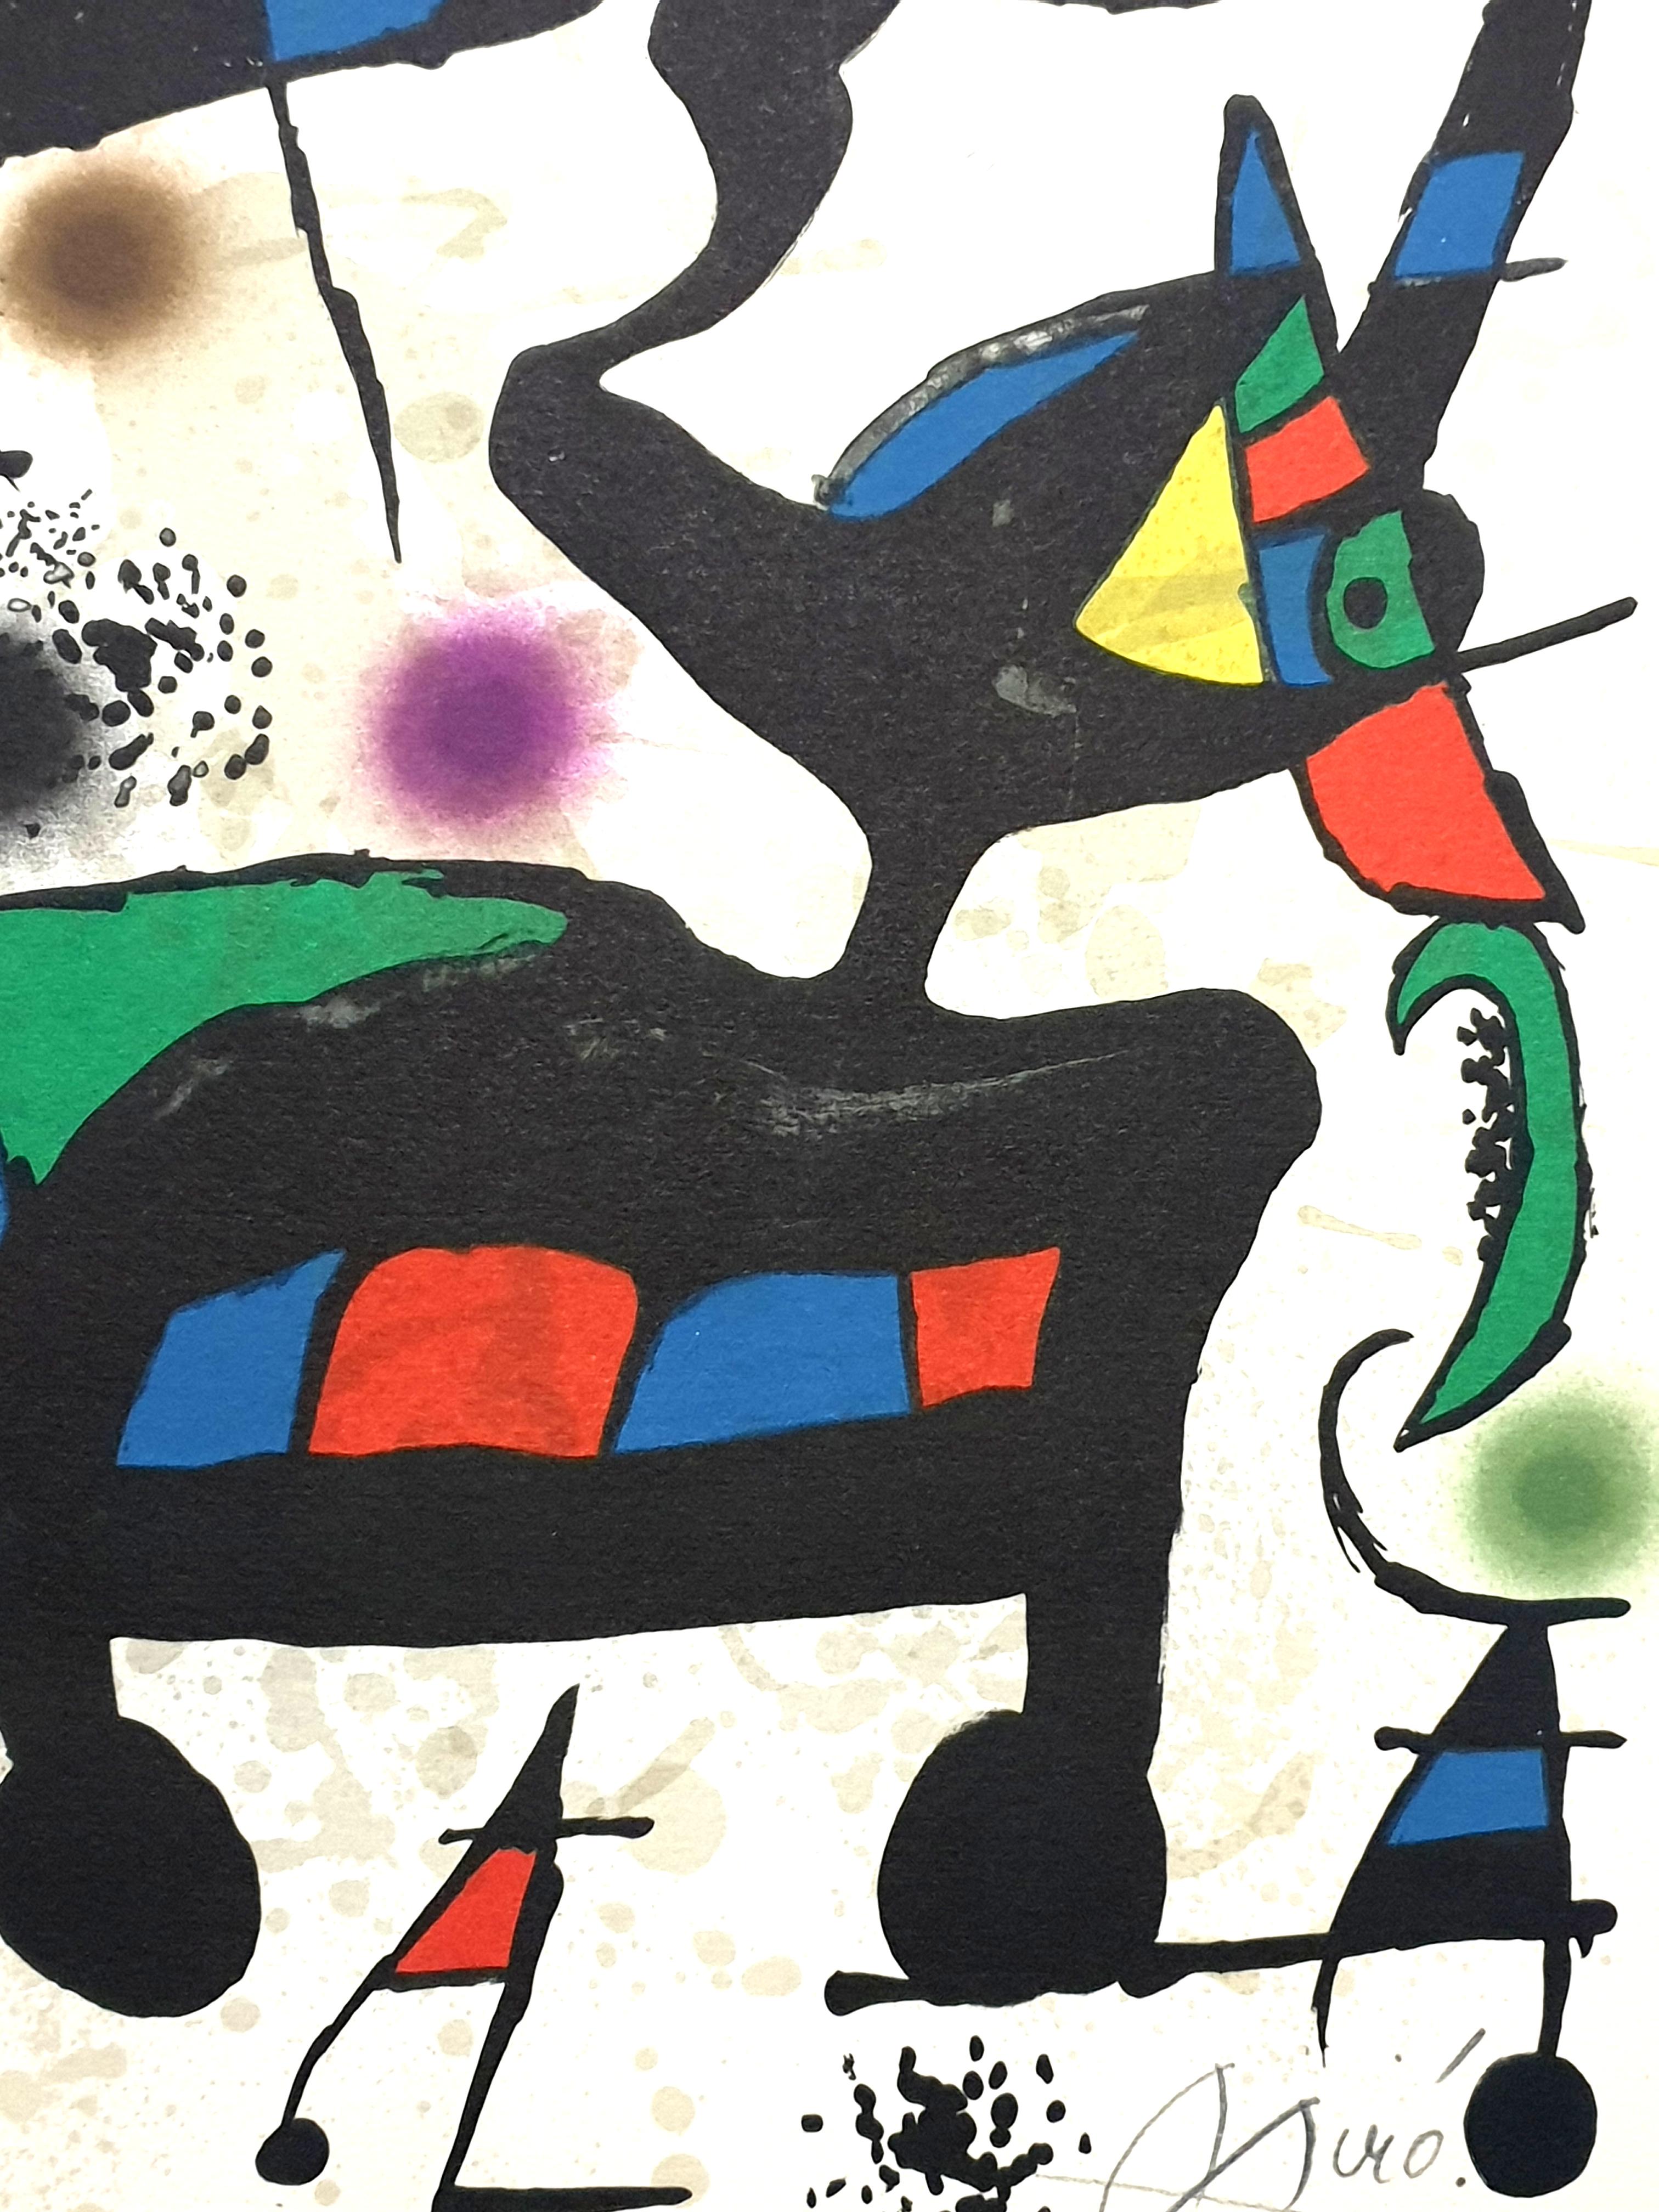 Joan Miro - “Plate I” from “Oda à Joan Miró” - Lithograph - Print by Joan Miró